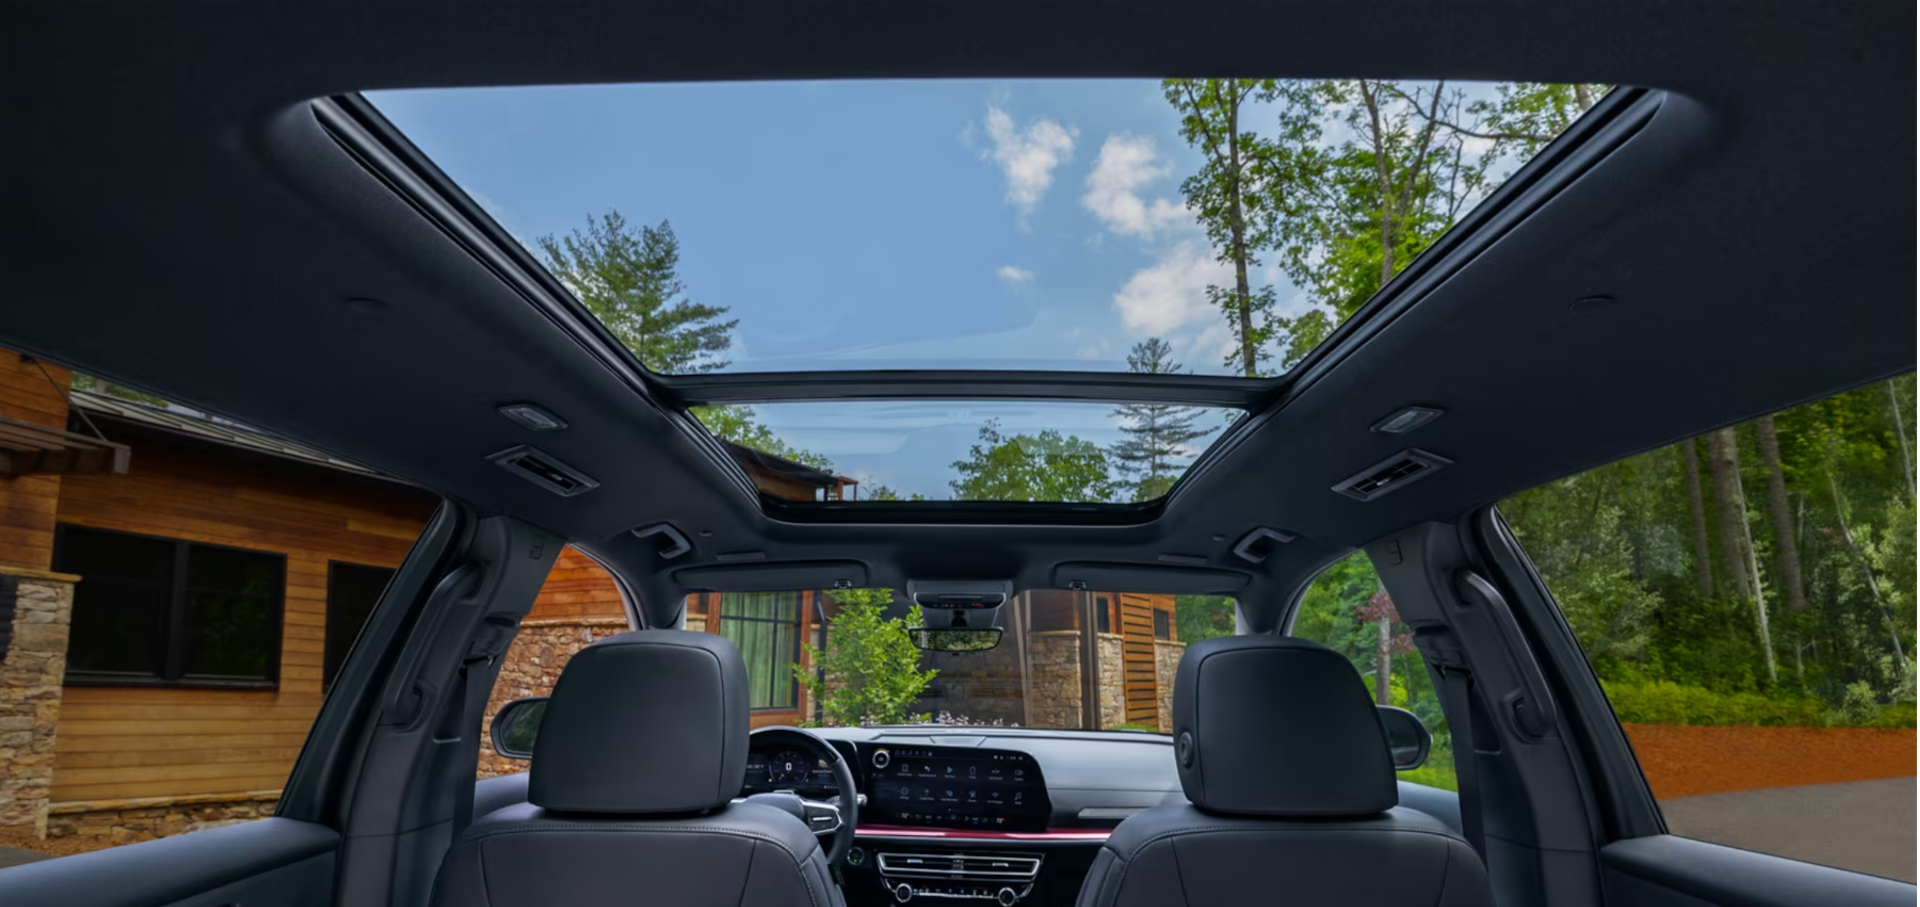 Panoramic sunroof. Comfortable seats. Chevrolet. Chevrolet dealer.